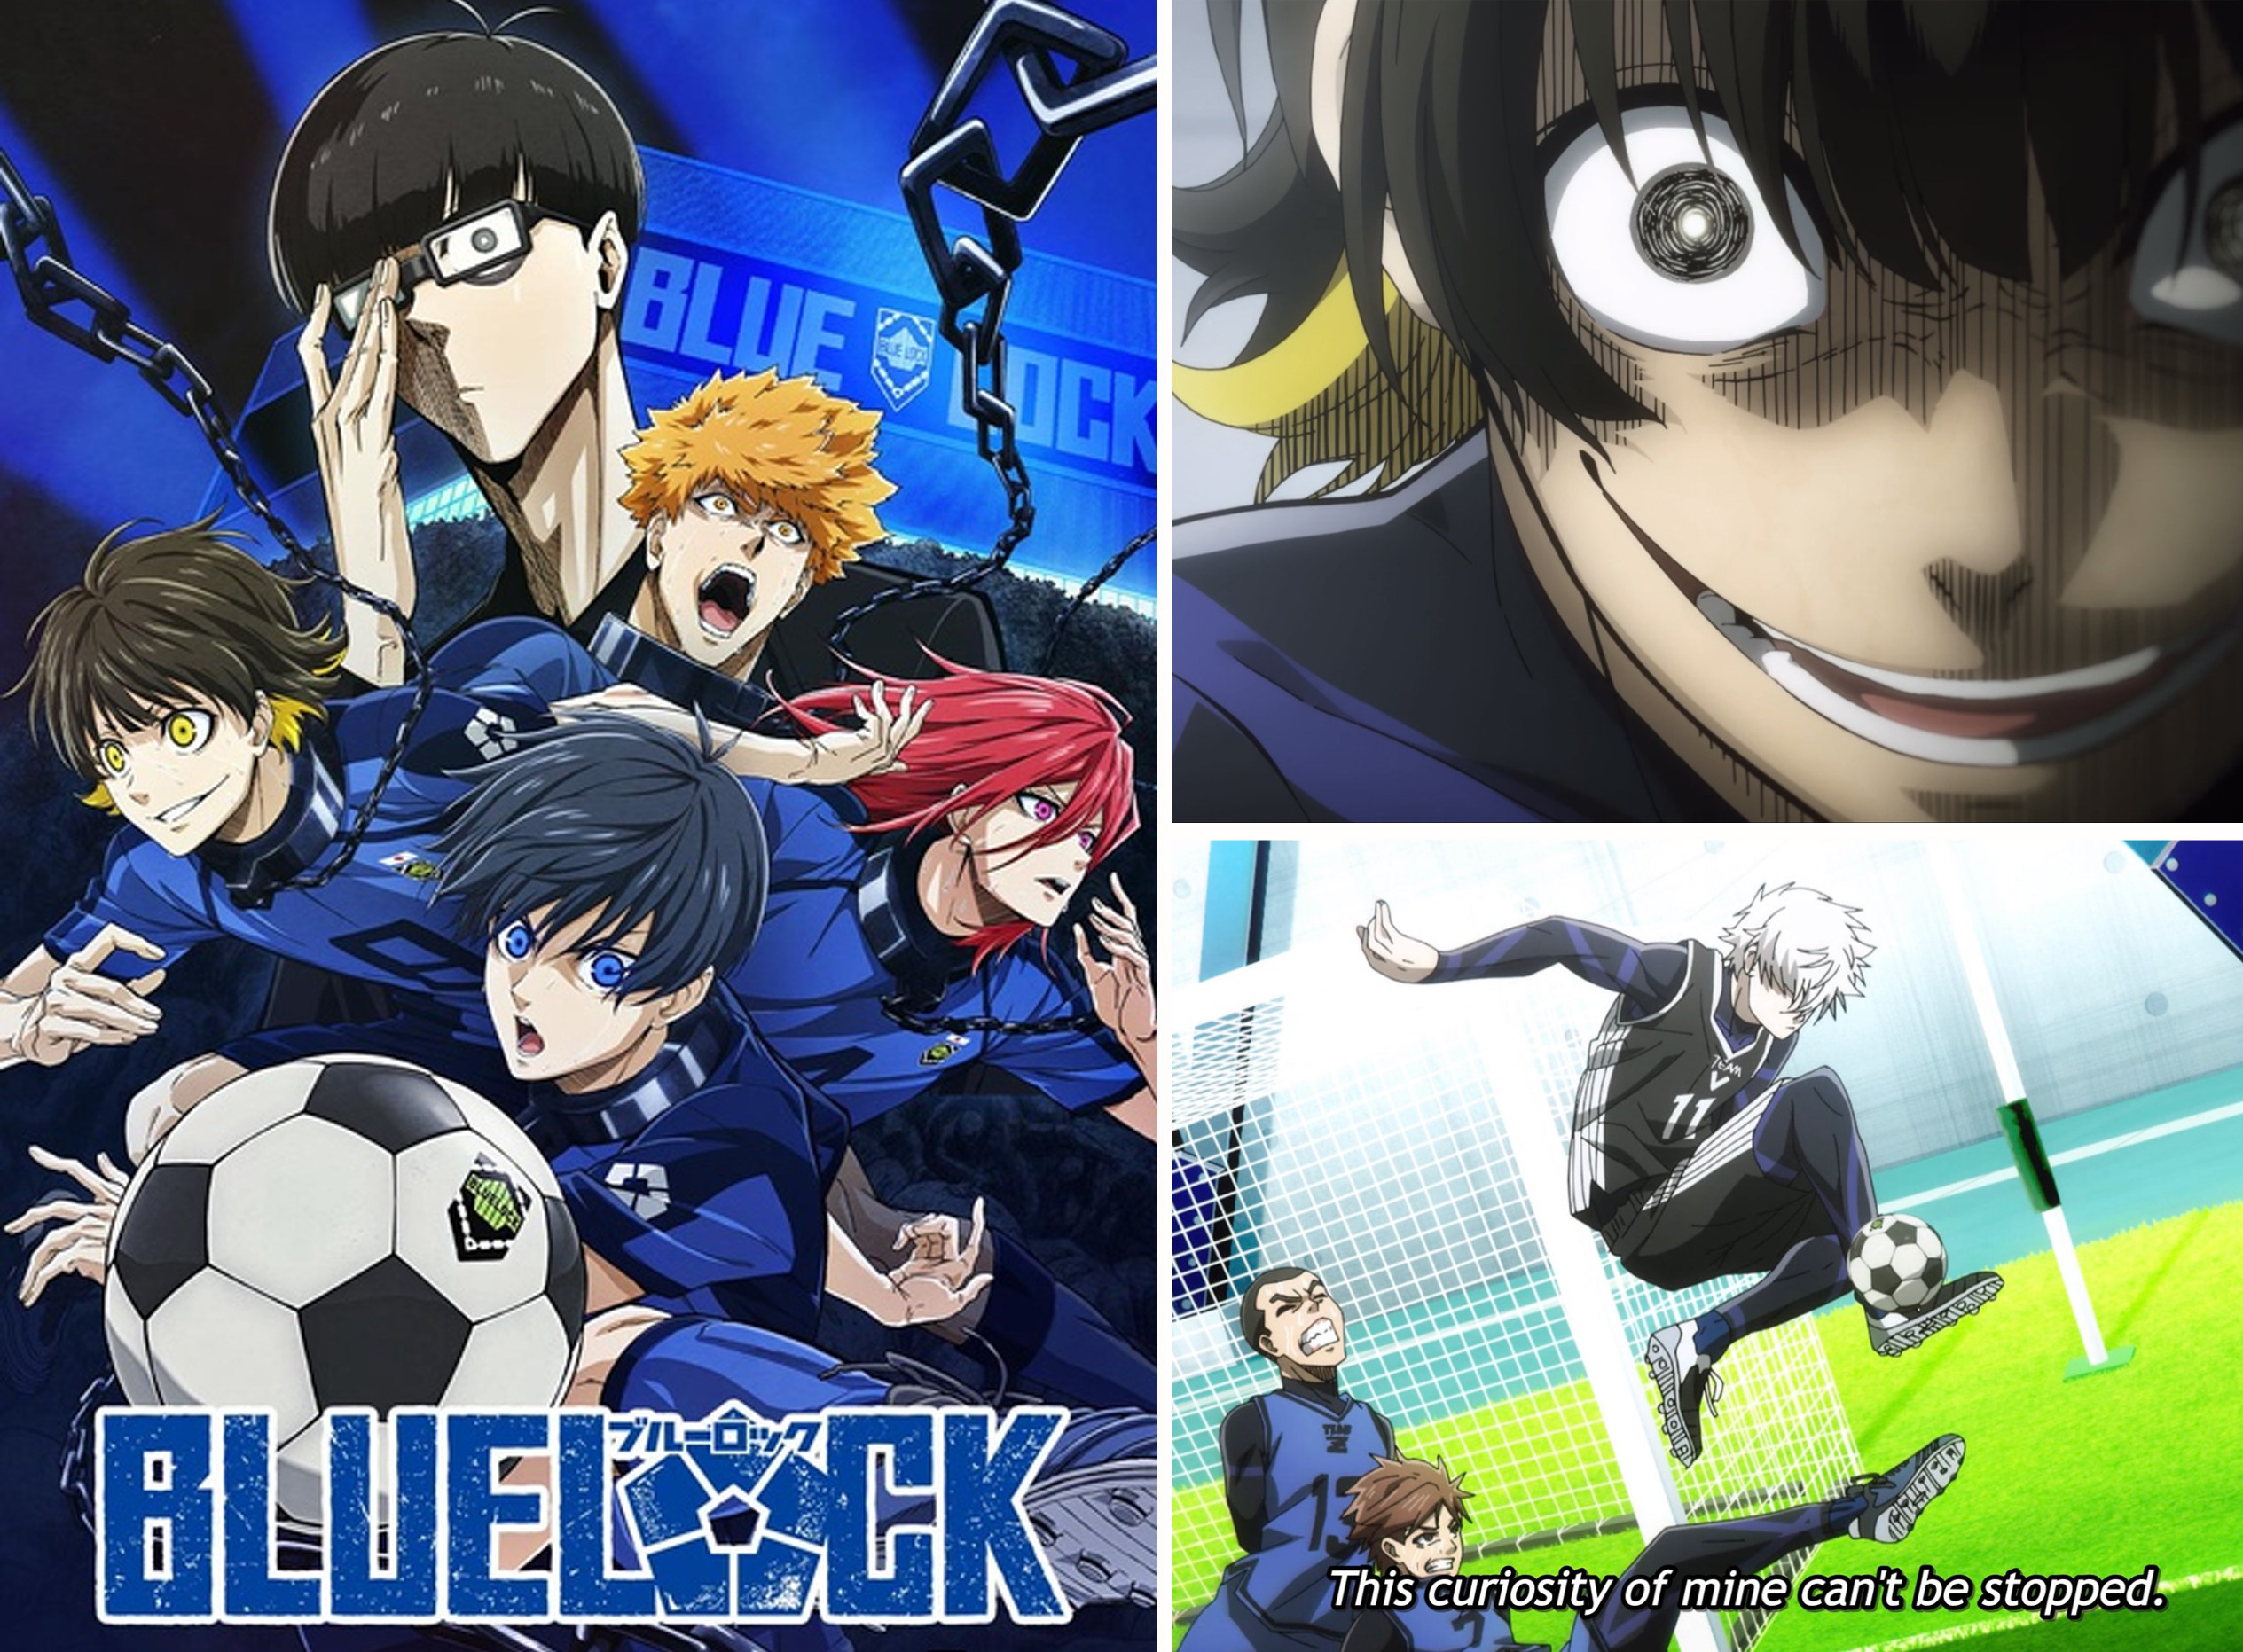 Preview Episode 2 Blue Lock _ Blue Lock Source: Manga Genre: Team